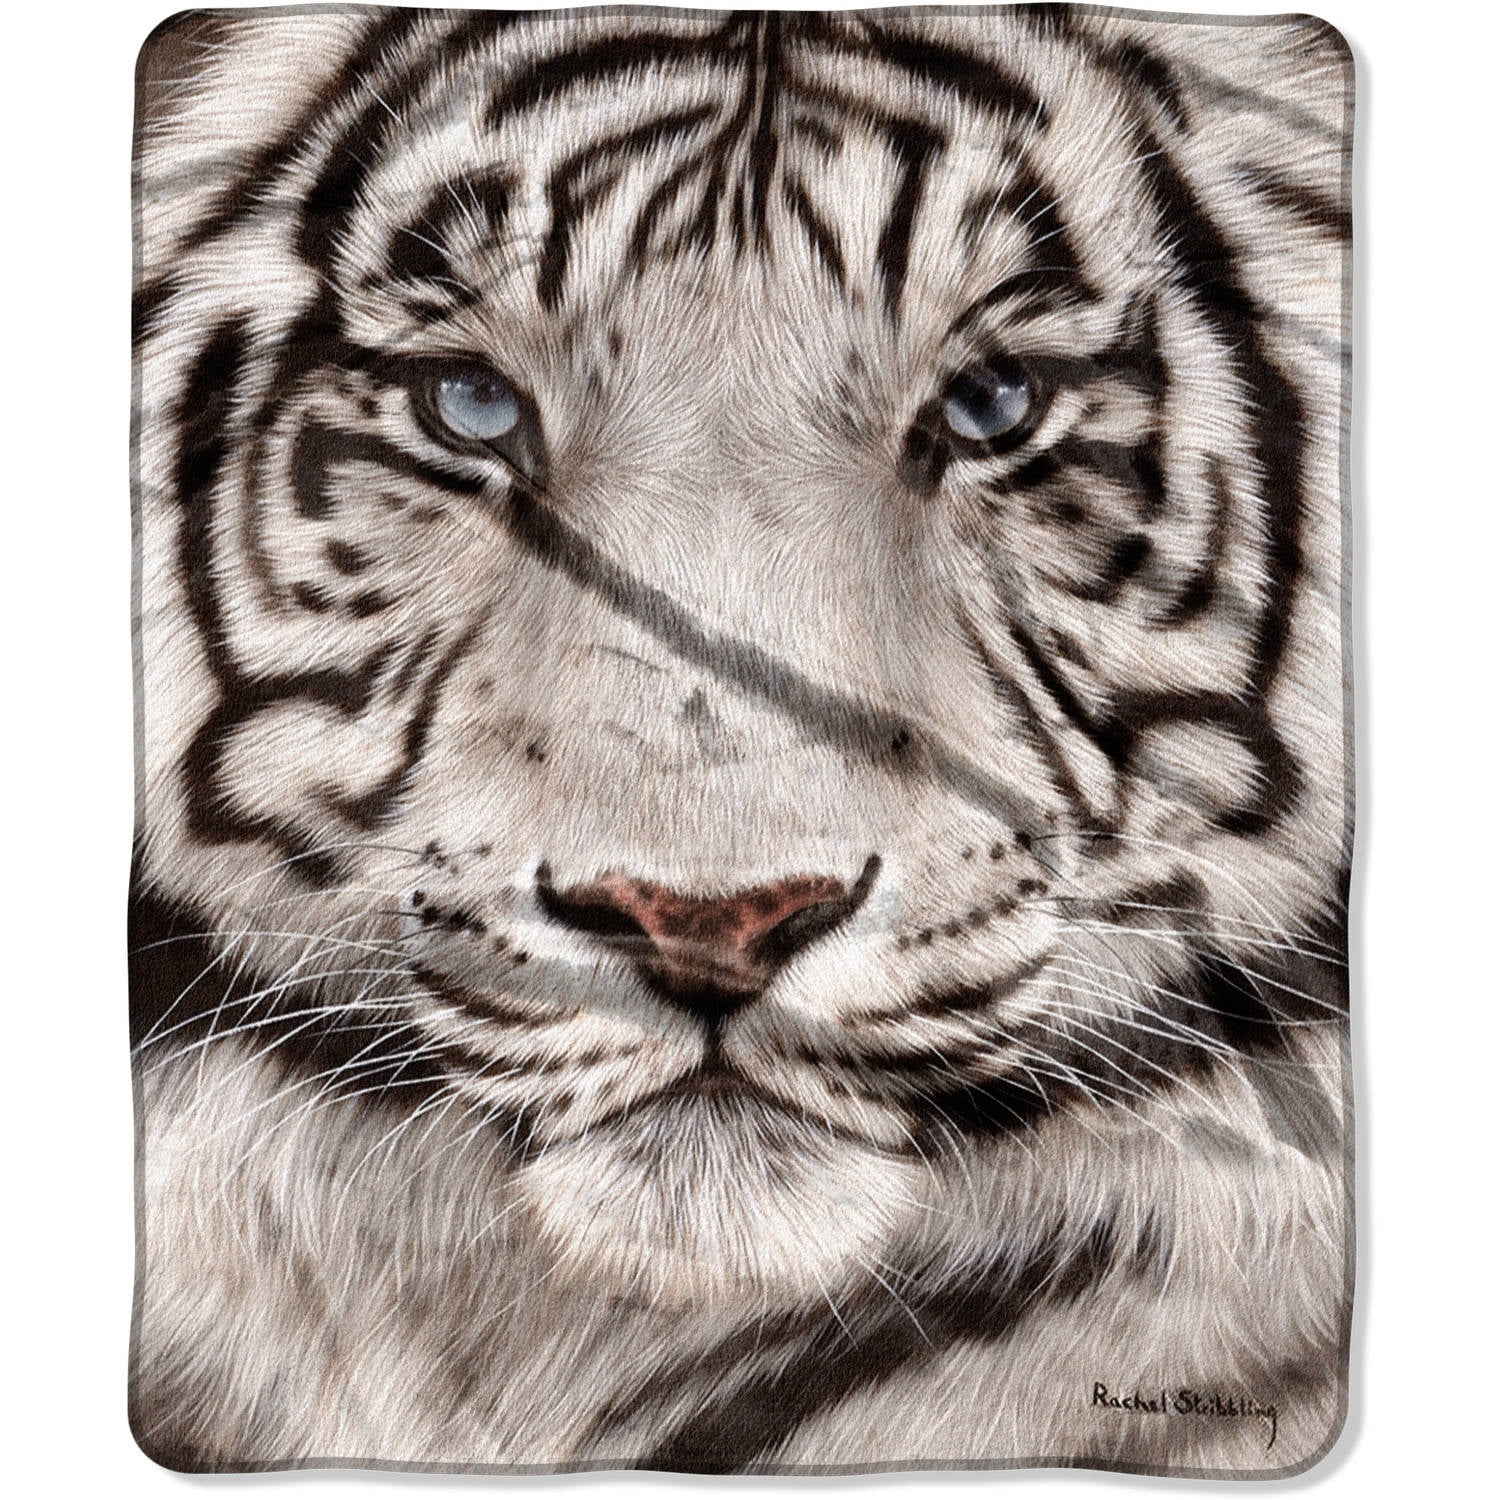 By Northwest Wildlife Royal Plush RASCHEL Blanket Throw 50" X 60" Super Soft 